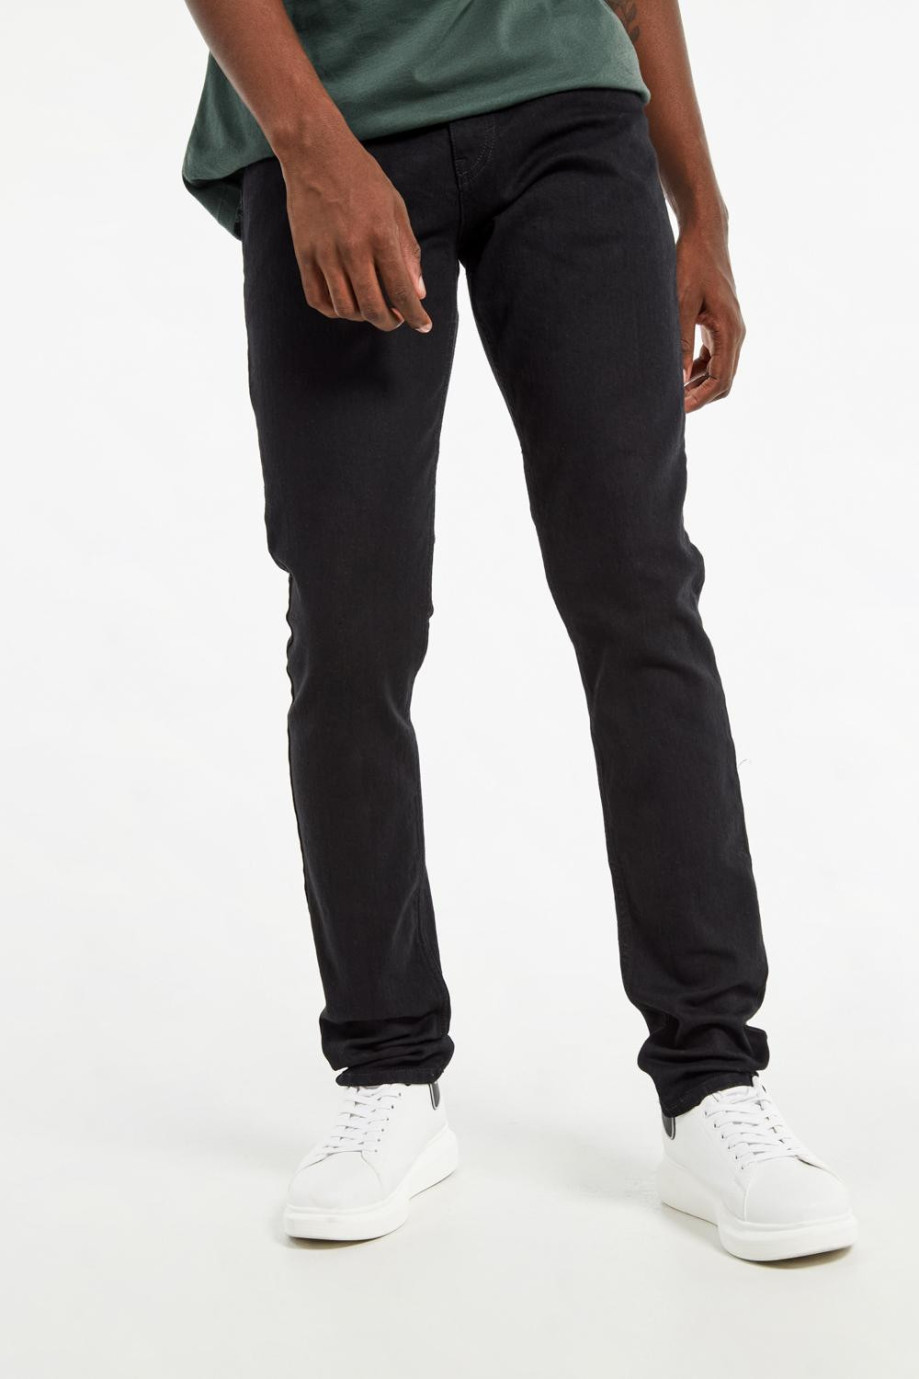 Jean negro tipo slim con 5 bolsillos, tiro bajo y ajuste ceñido